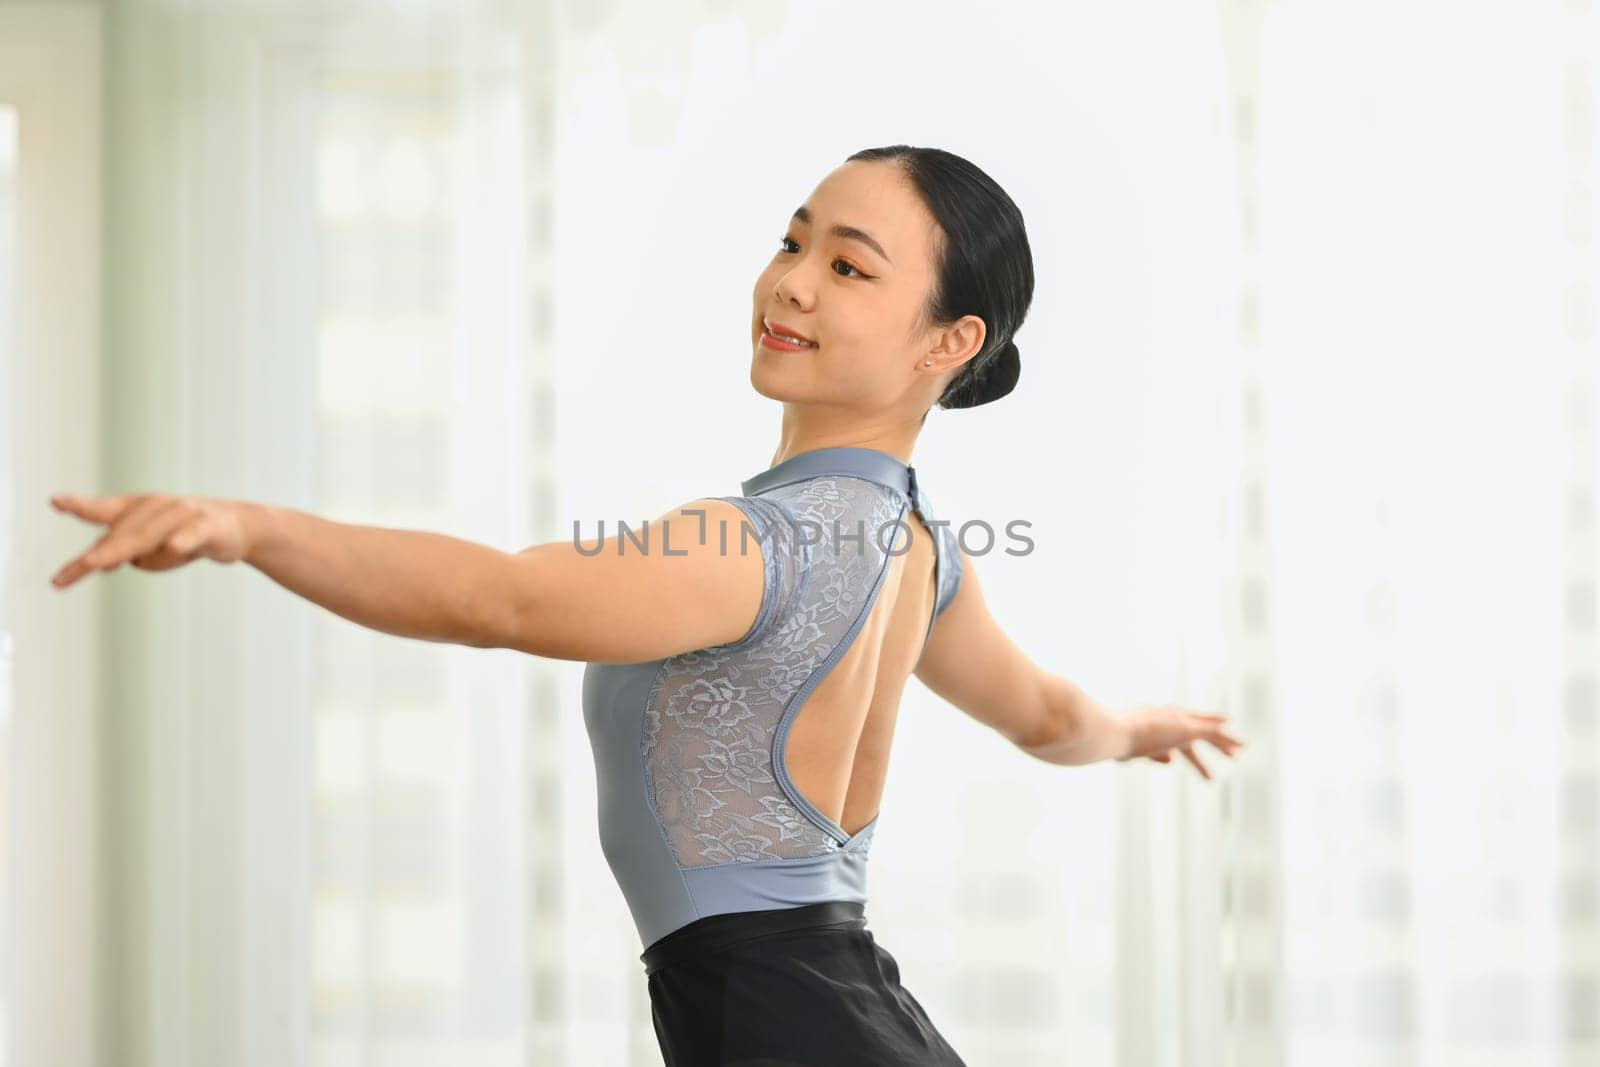 Shot of elegant ballerina practicing dance moves in bright studio. Dance, art, education and flexibility concept.